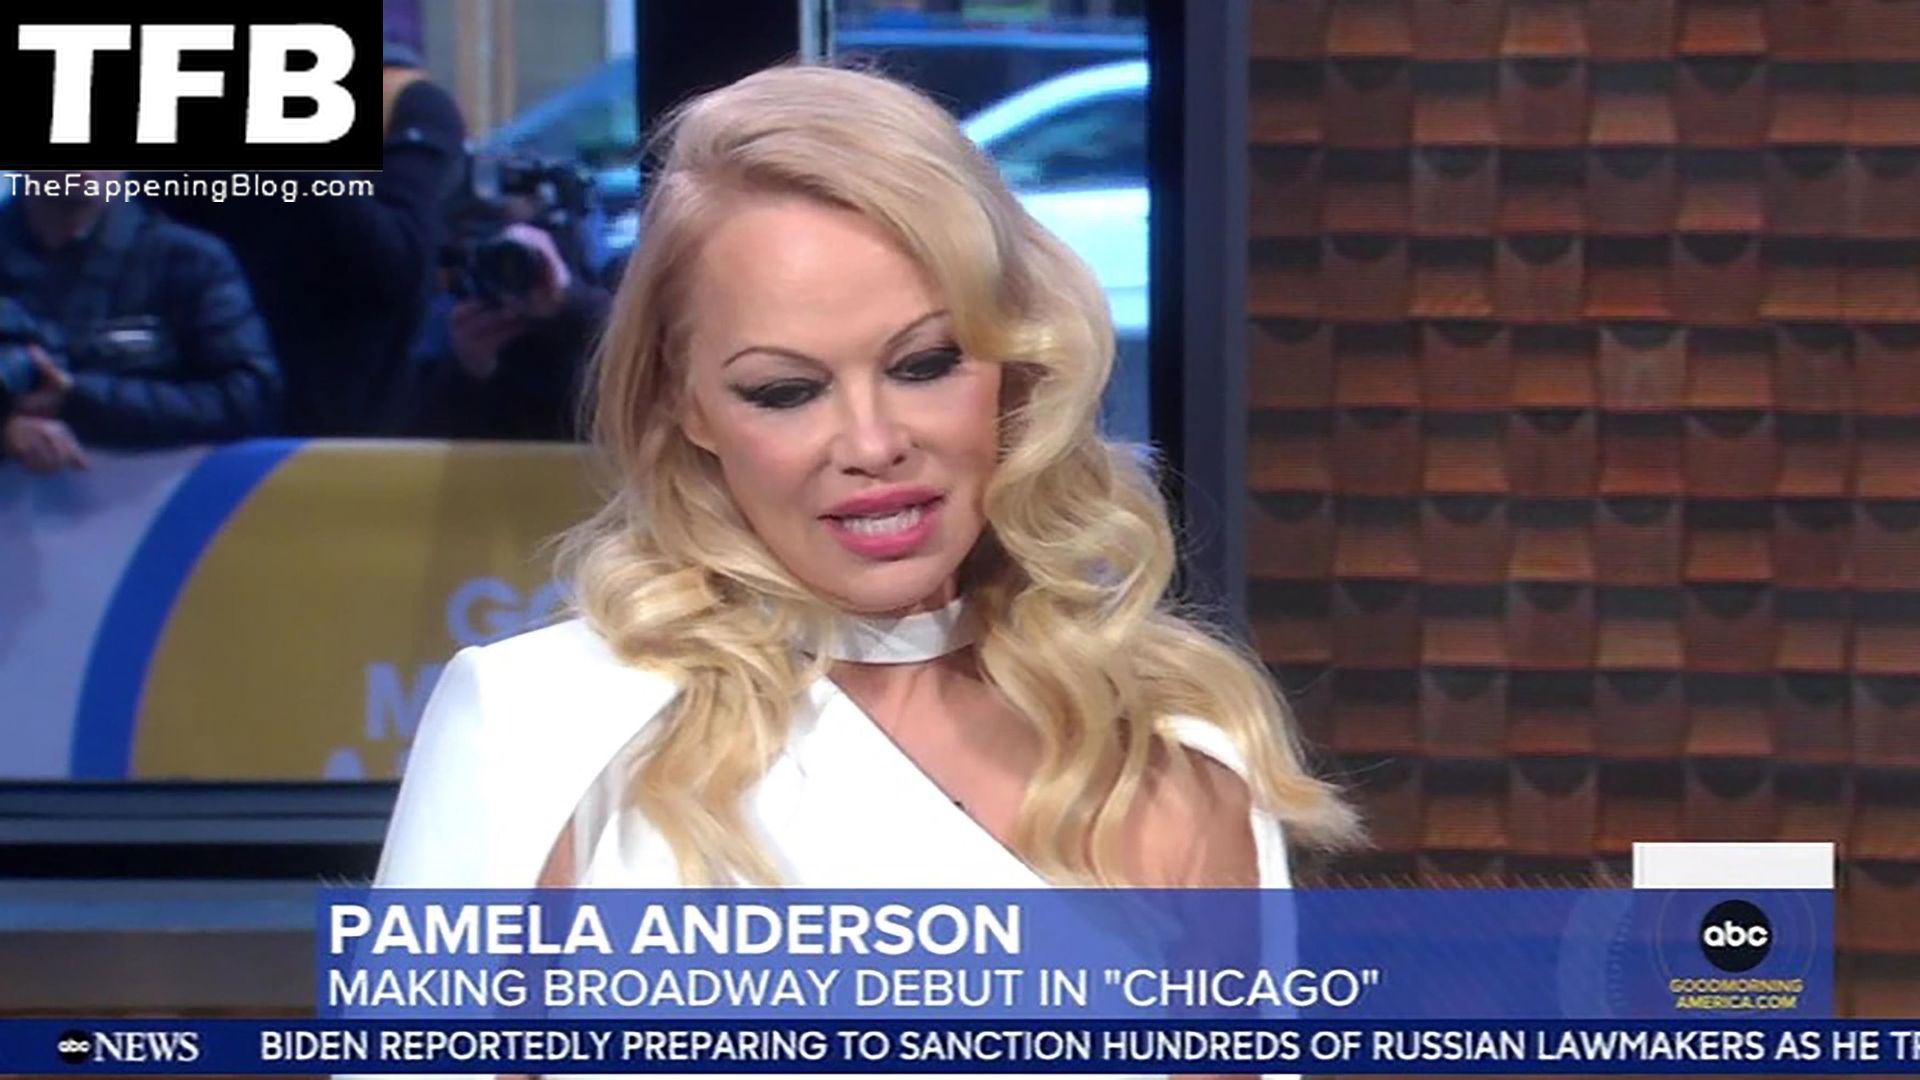 Pamela-Anderson-Hot-The-Fappening-Blog-12.jpg